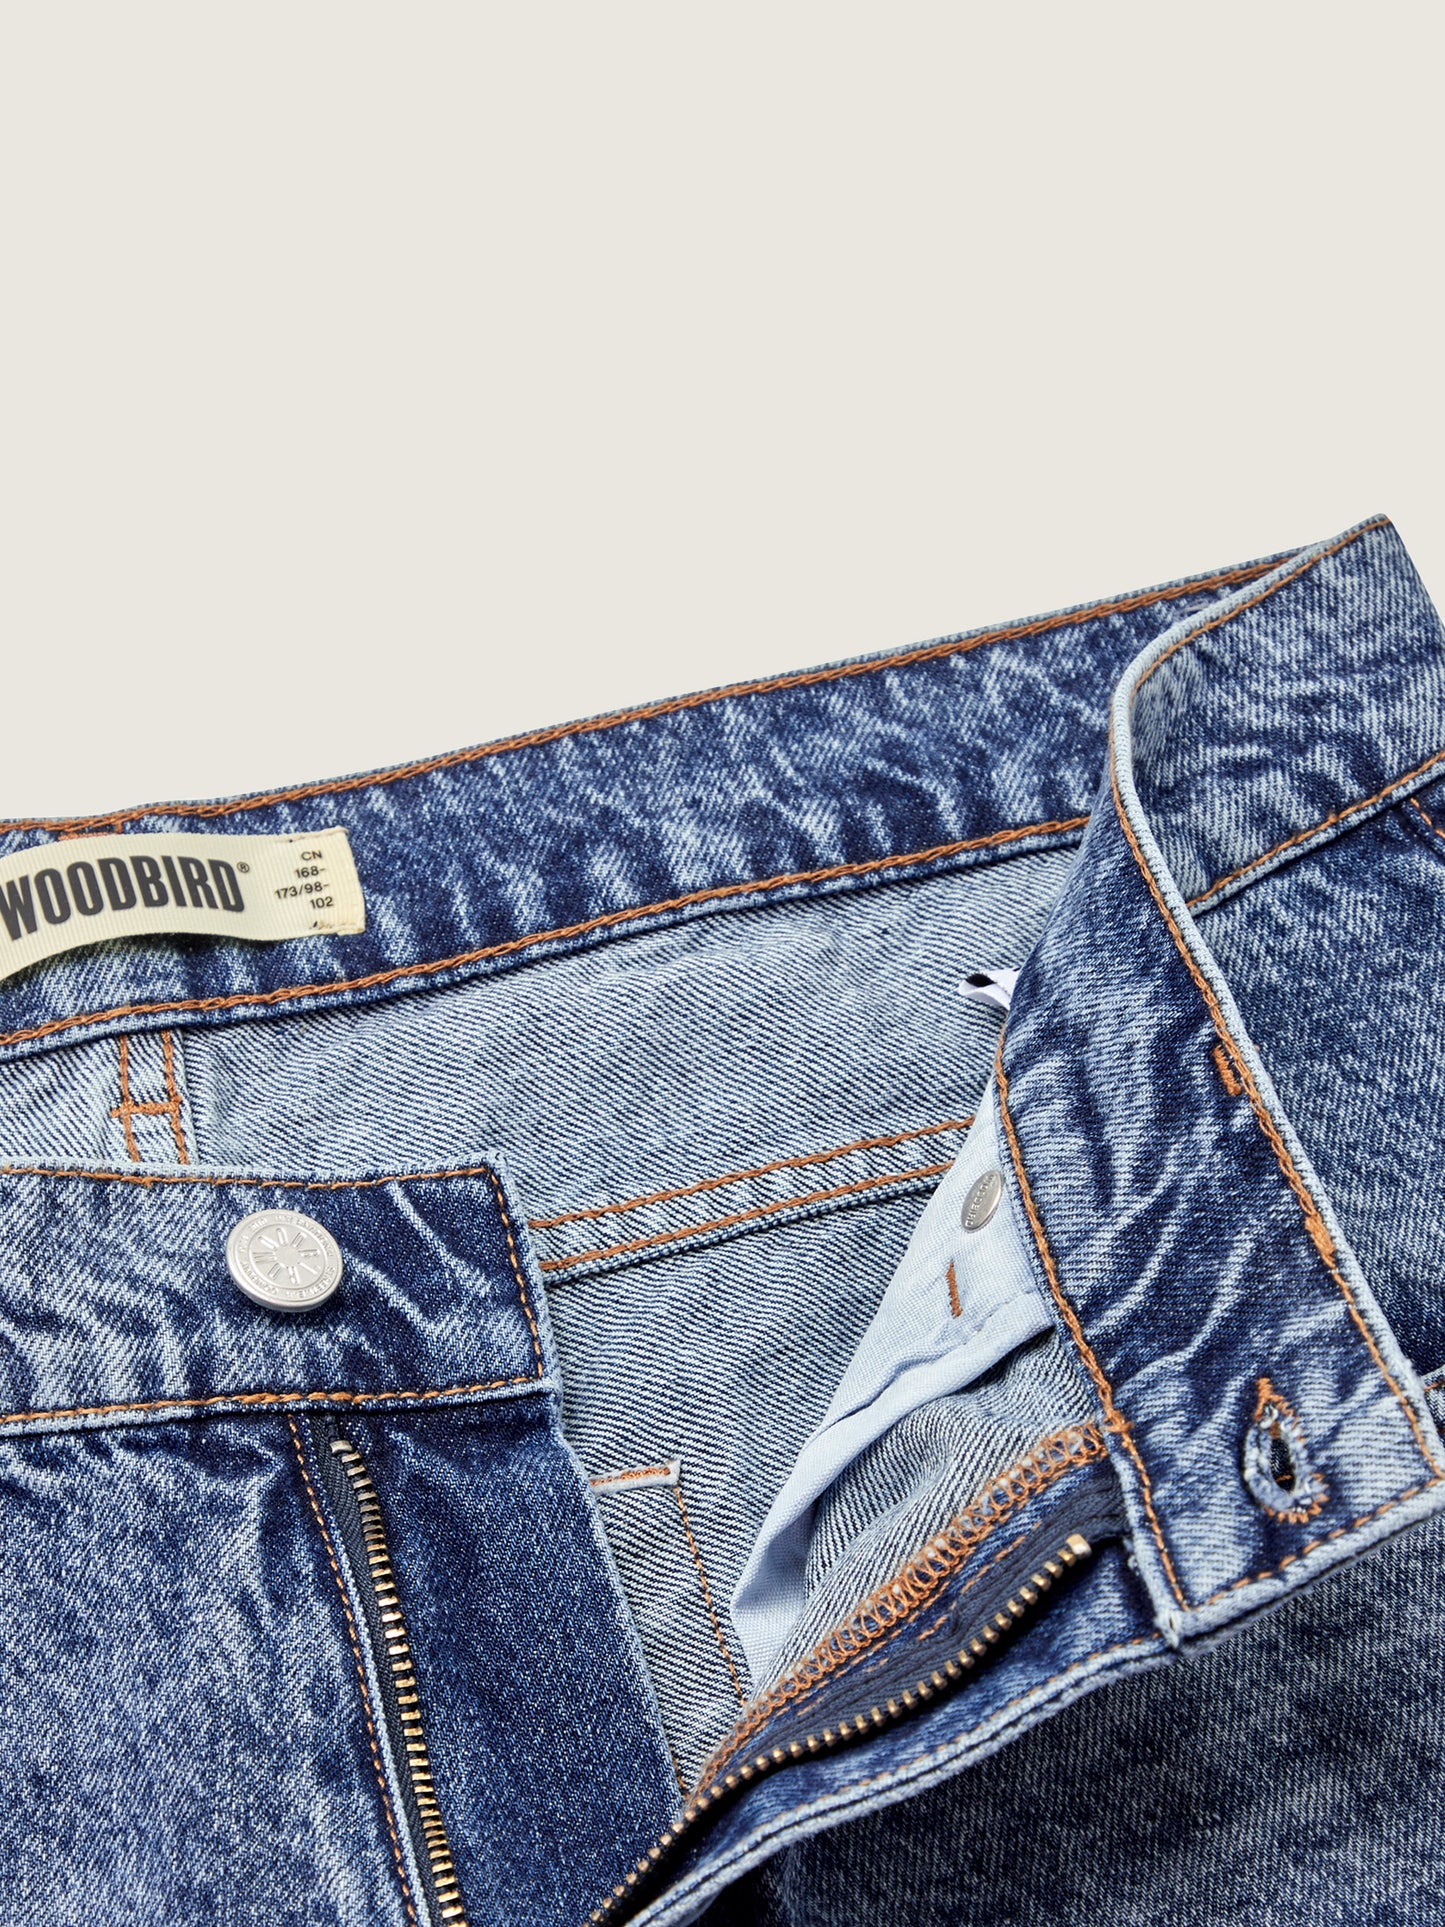 Woodbird WBDoc Marble Jeans Jeans Vintage Blue